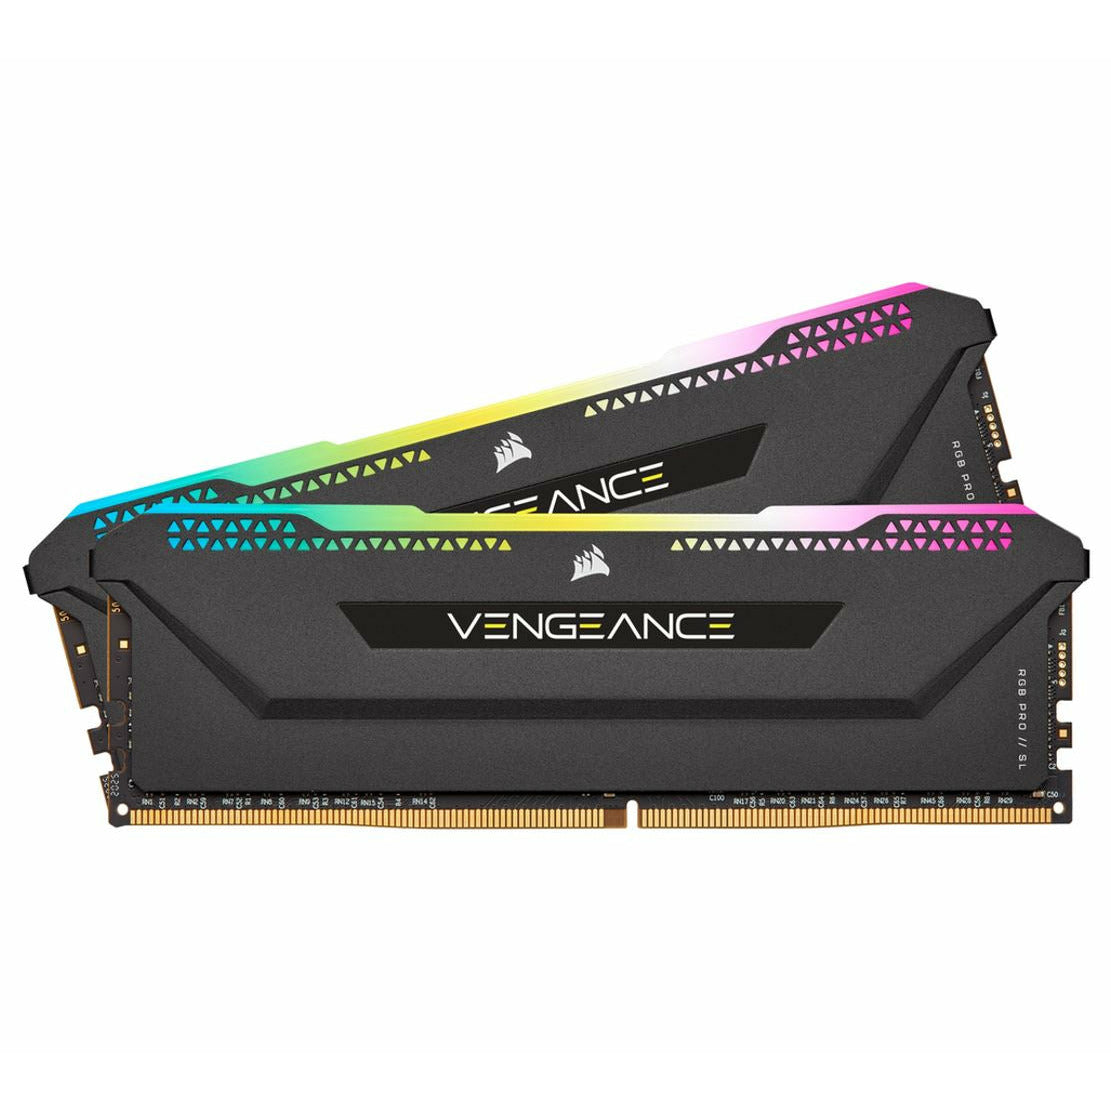 CORSAIR Vengeance RGB PRO SL 32GB (2x16GB) DDR4 3600Mhz C18 Black Heatspreader for AMD Desktop Gaming Memory